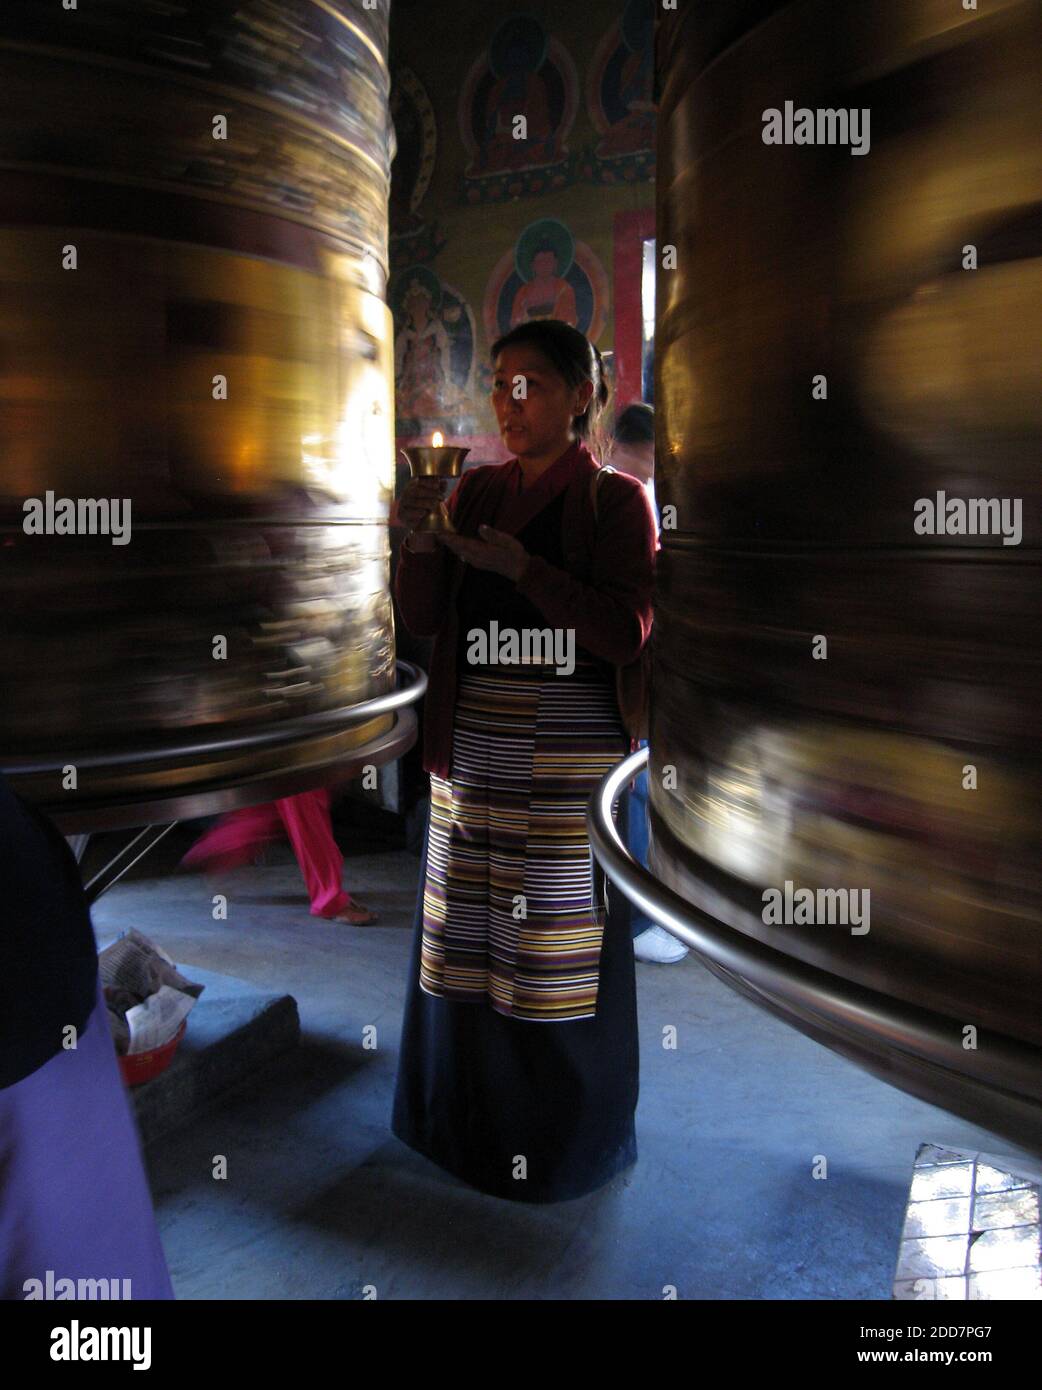 NESSUN FILM, NESSUN VIDEO, NESSUNA TV, NESSUN DOCUMENTARIO - UNA donna buddista tibetana canta i prayersat Boudhanath Stupa a Kathmandu mentre le ruote di preghiera girano su entrambi i lati di lei. Kathmandu, Nepal, il 9 febbraio 2008. Foto di Tim Johnson/MCT/ABACAPRESS.COM Foto Stock